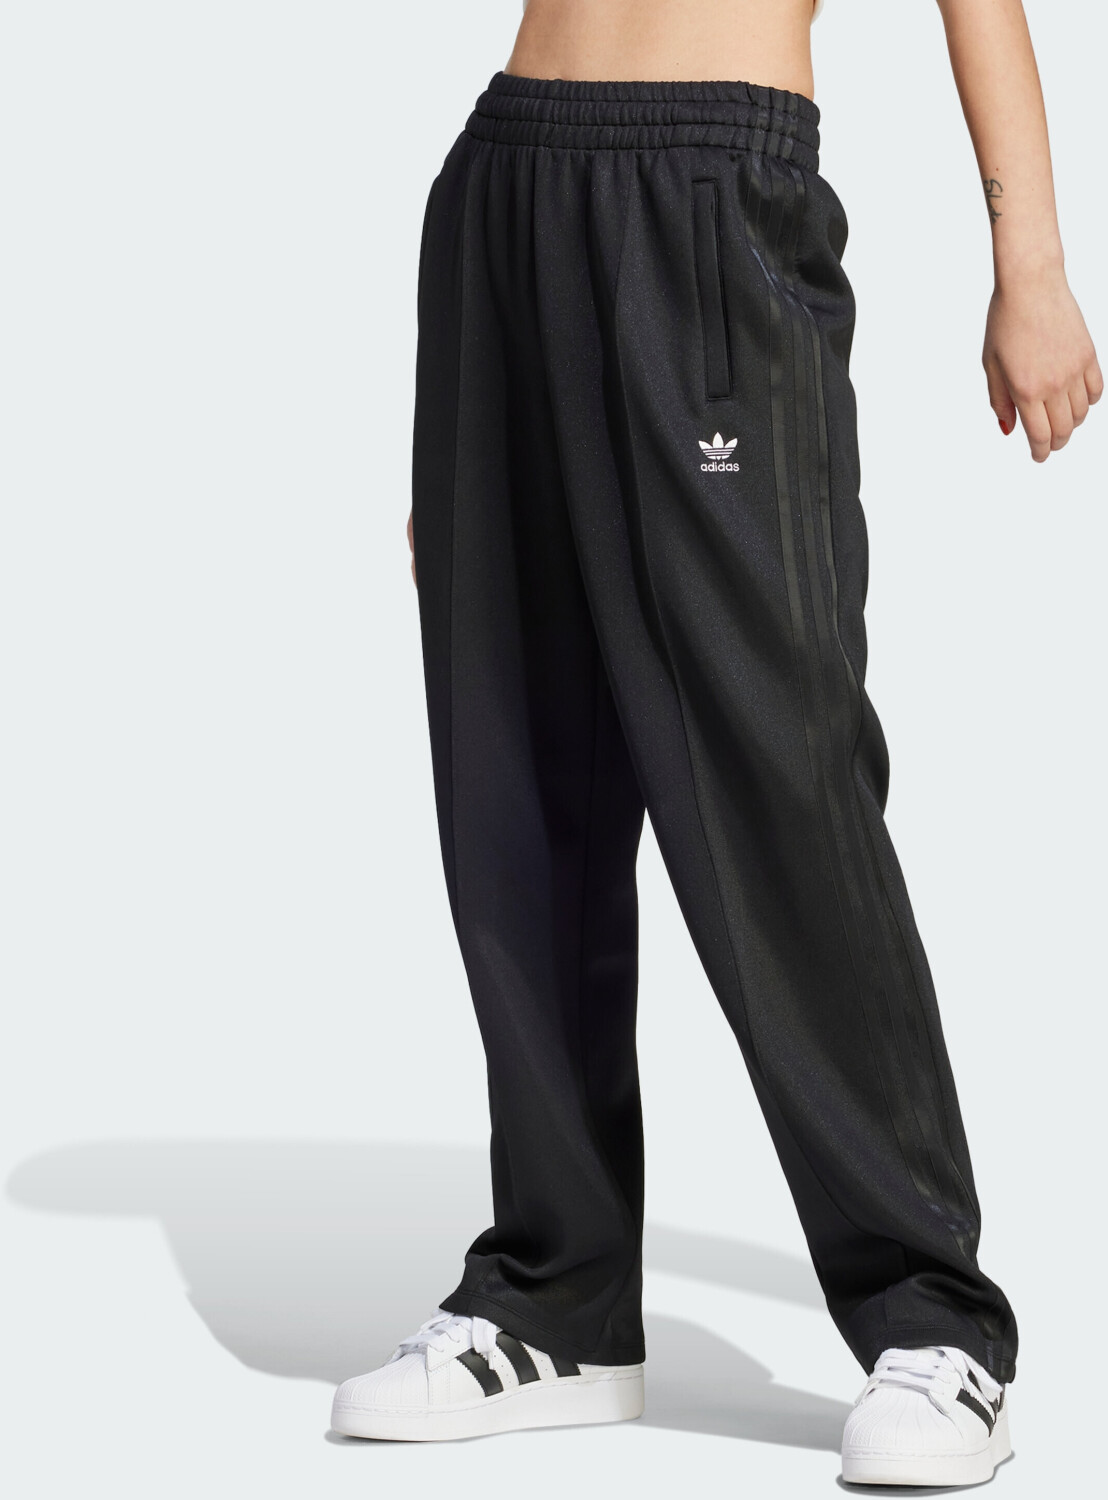 Adidas Woman (IK6505) € Training 44,99 Pants black ab Preisvergleich bei SST | adicolor Oversized Classics